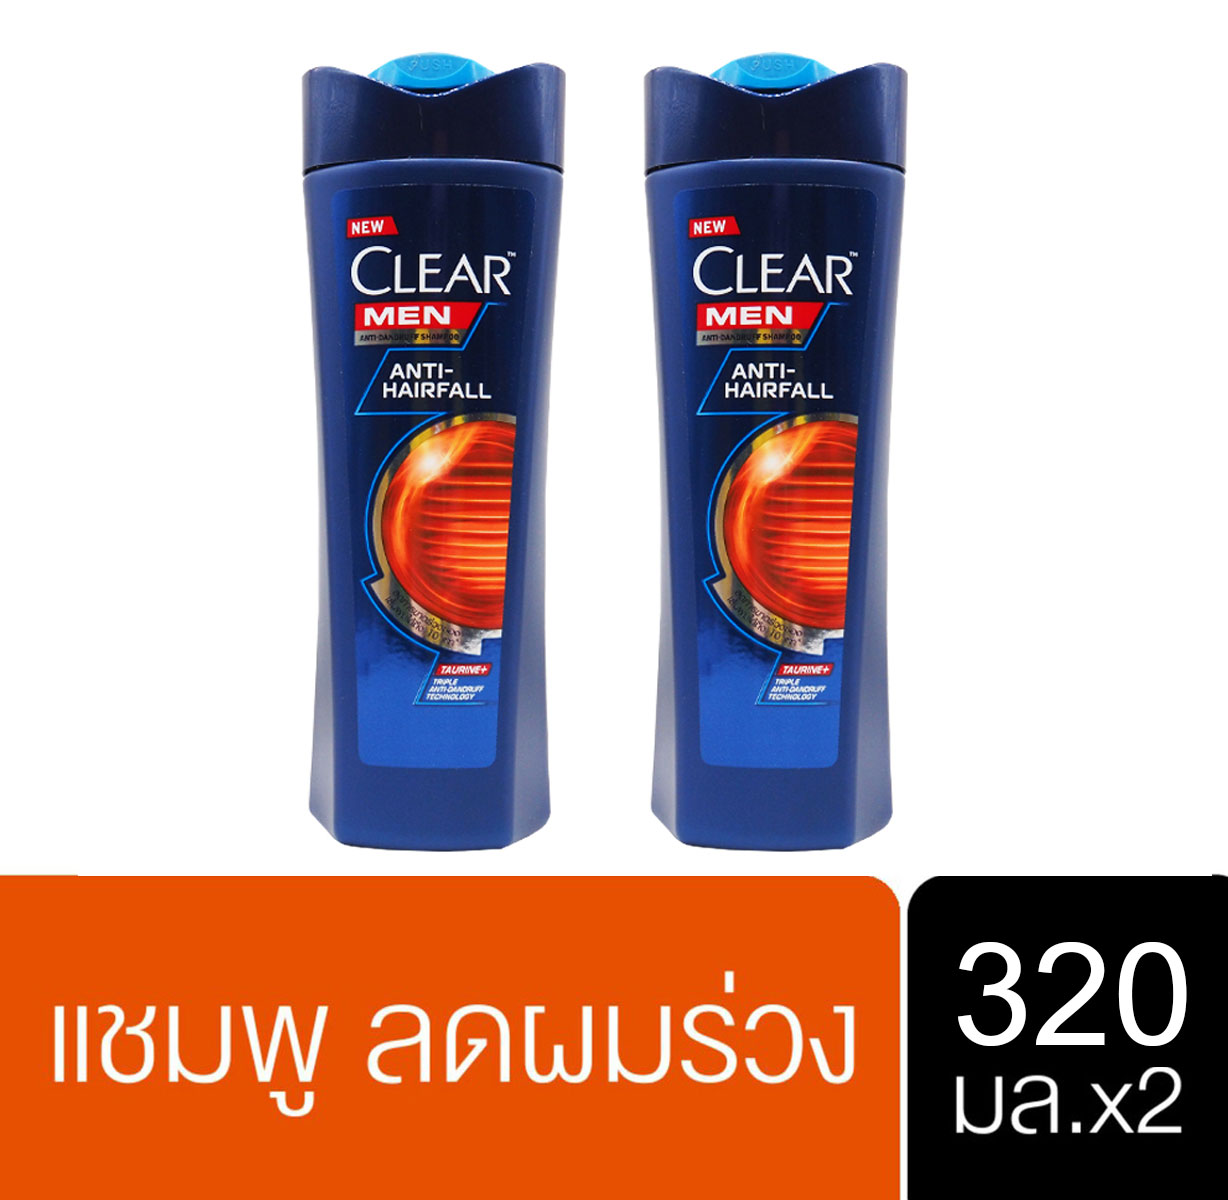 Clear Men Anti Hair Dandruff Shampoo 320 มล.  [x2] เคลียร์ เมน แอนตี้ แฮร์ฟอล แชมพู ขจัดรังแค ลดผมขาดร่วง 320 มล. [x2]